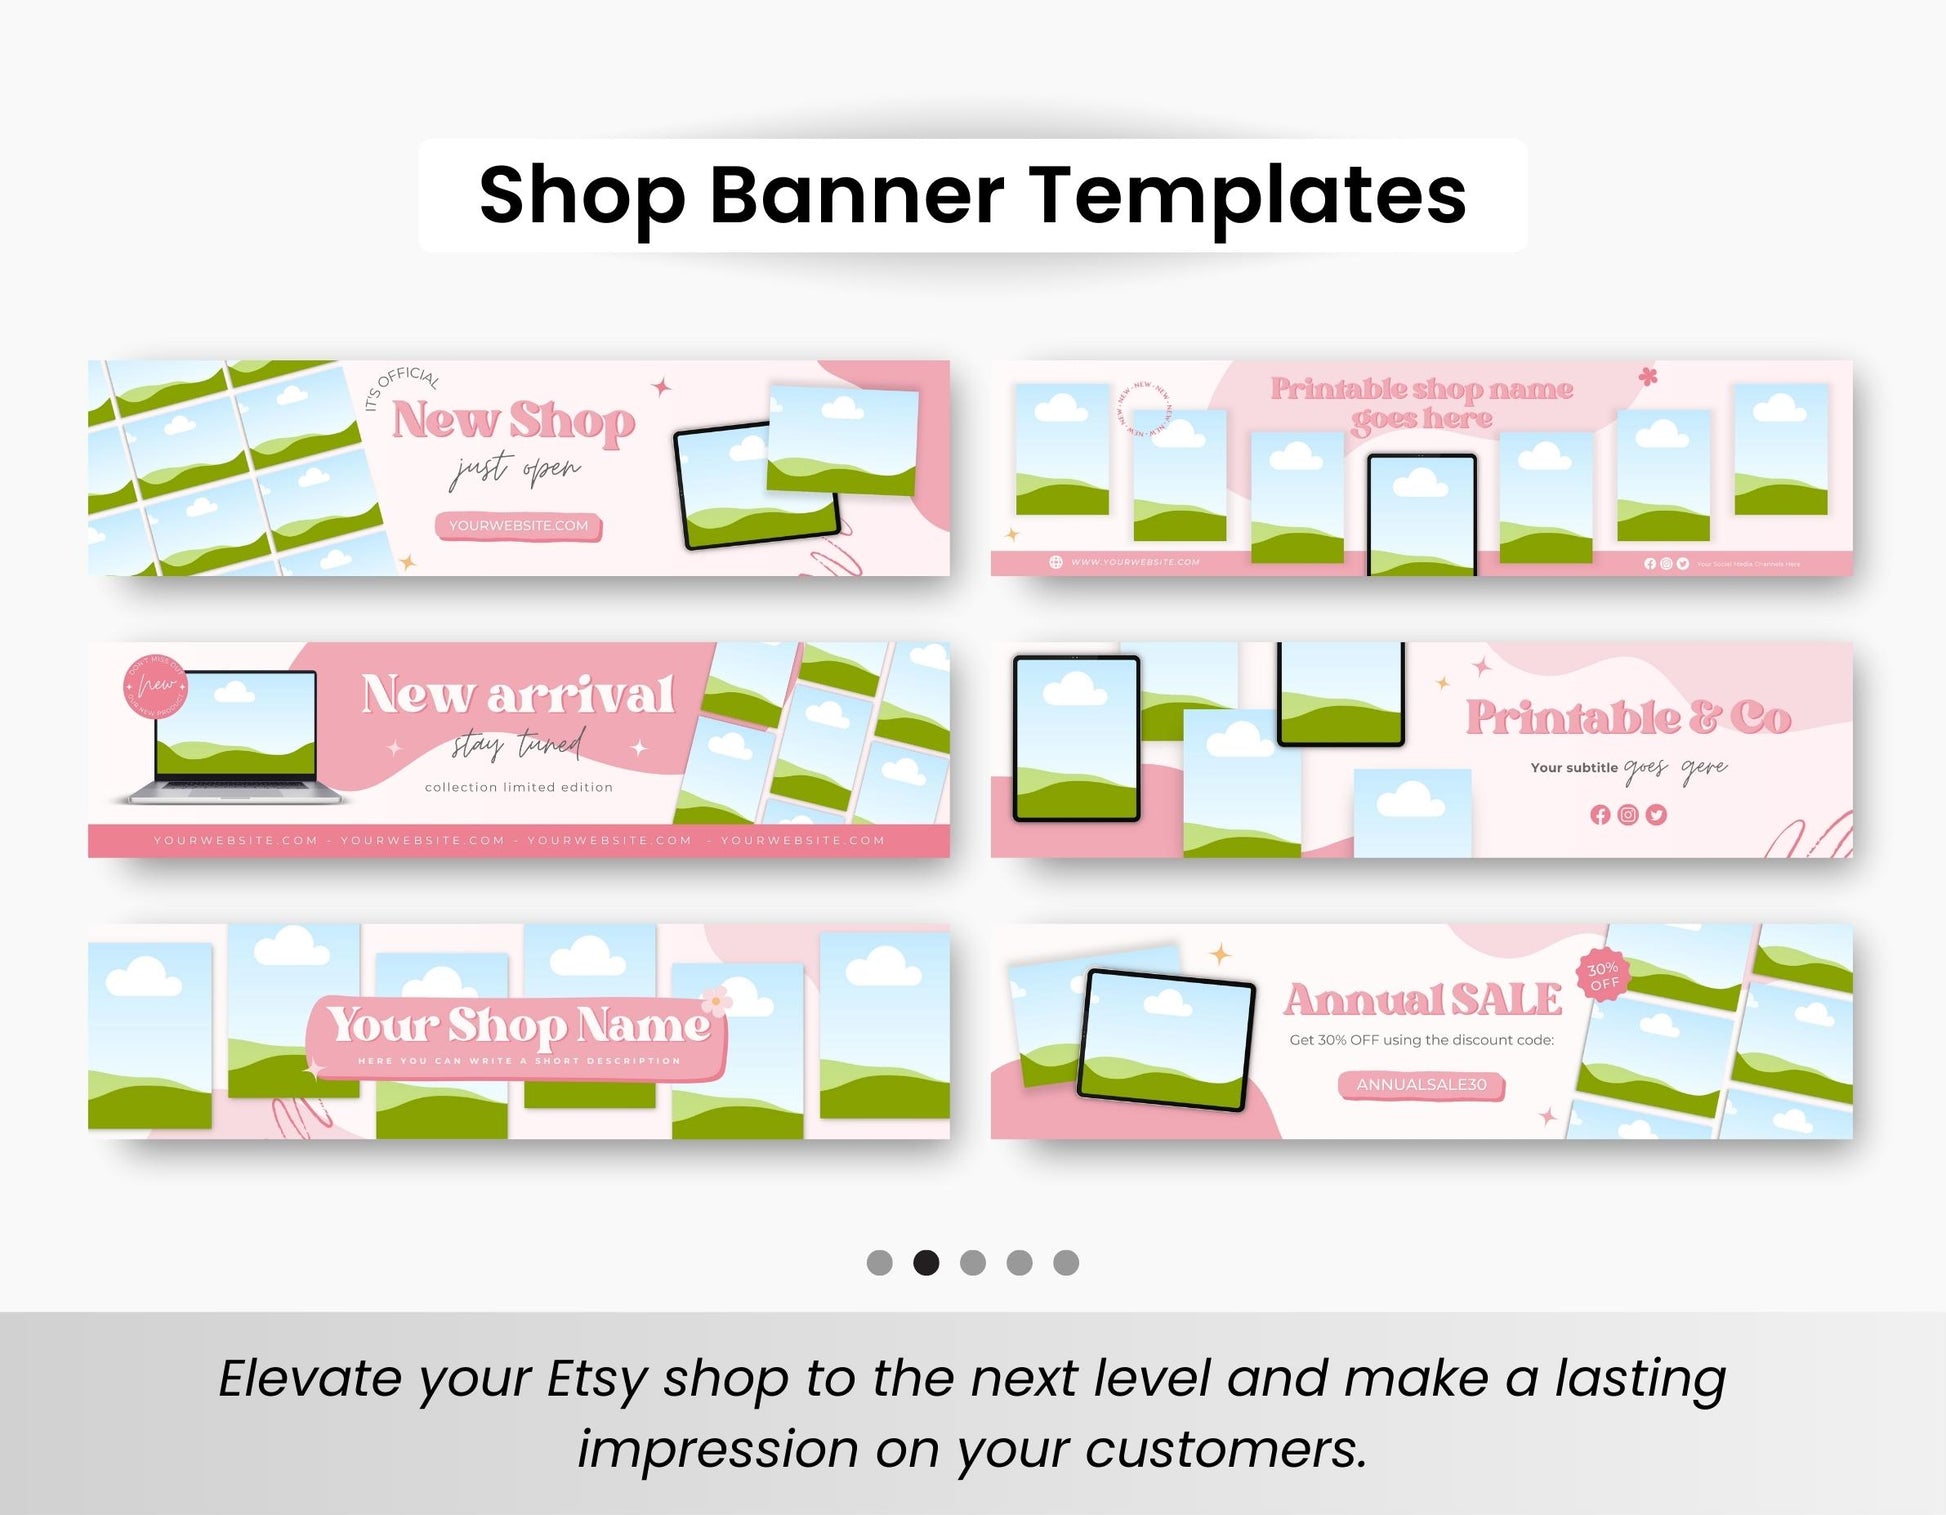 Etsy Digital Shop Branding Bundle Kit Pink DigiPax